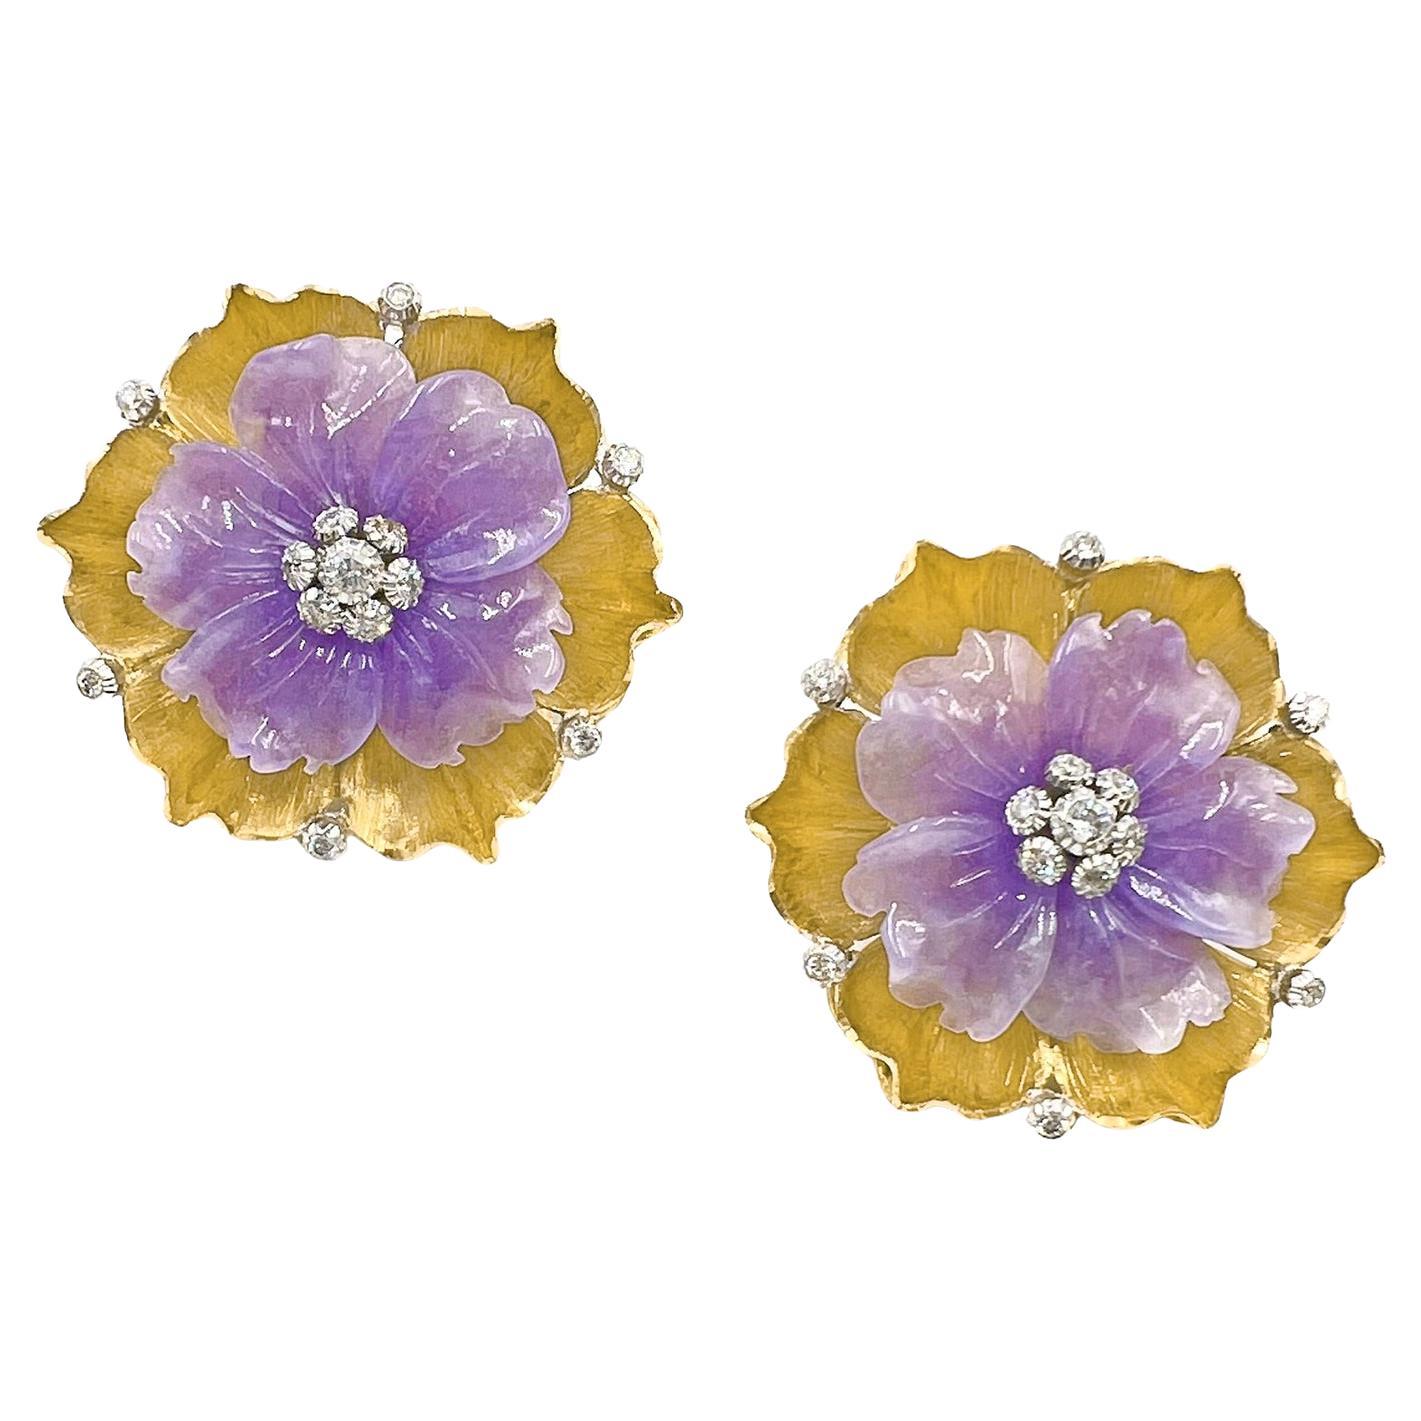 Buccellati 18k Gold Lavender Jade Diamond Flower Earrings